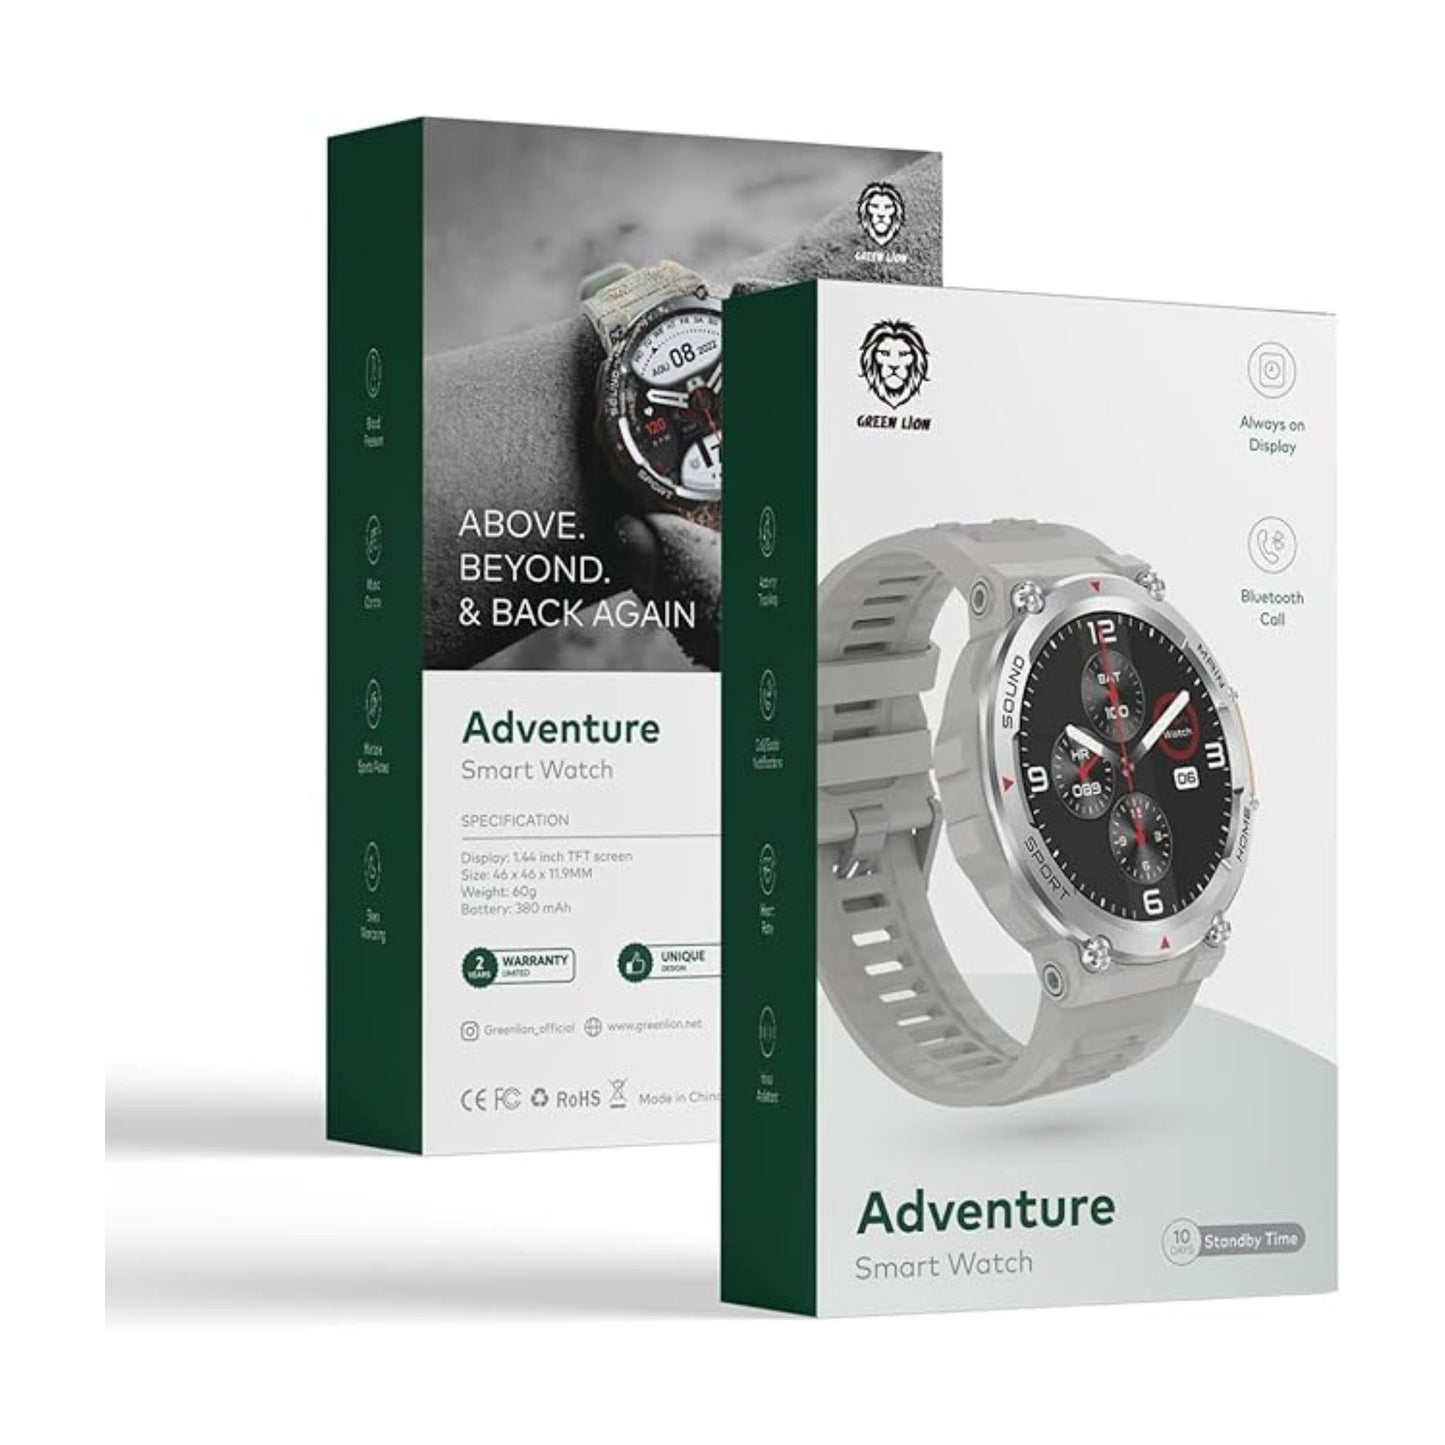 Green Lion Adventure Smart Watch-Gray